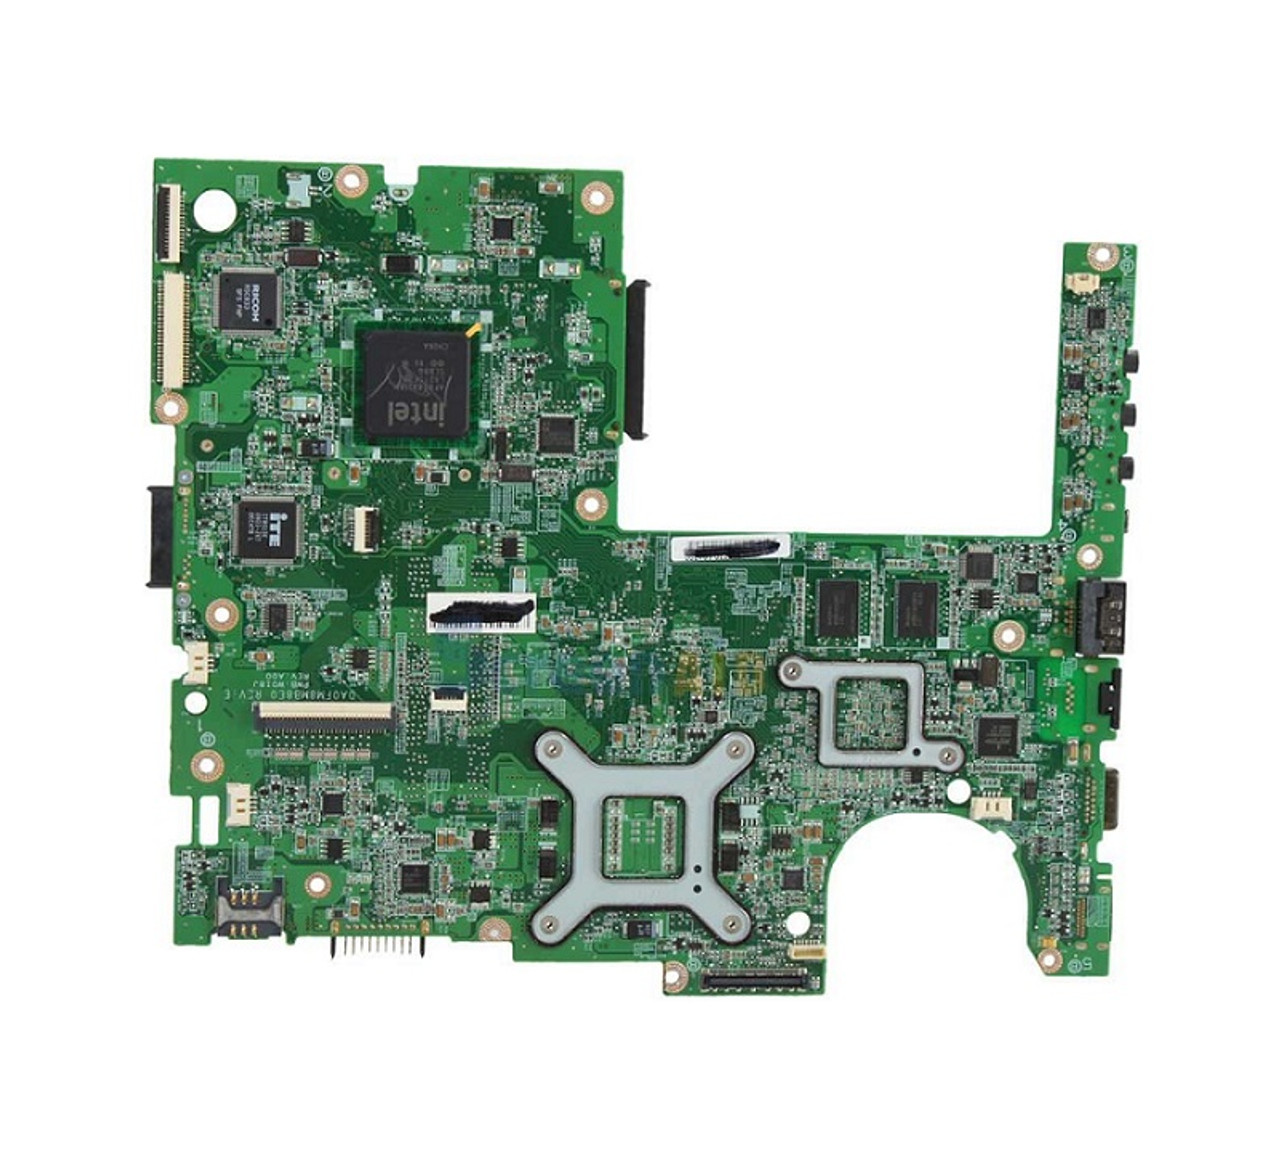 60-NYLMB1100-C01 - Asus G60jx Intel Laptop Motheboard Socket-989